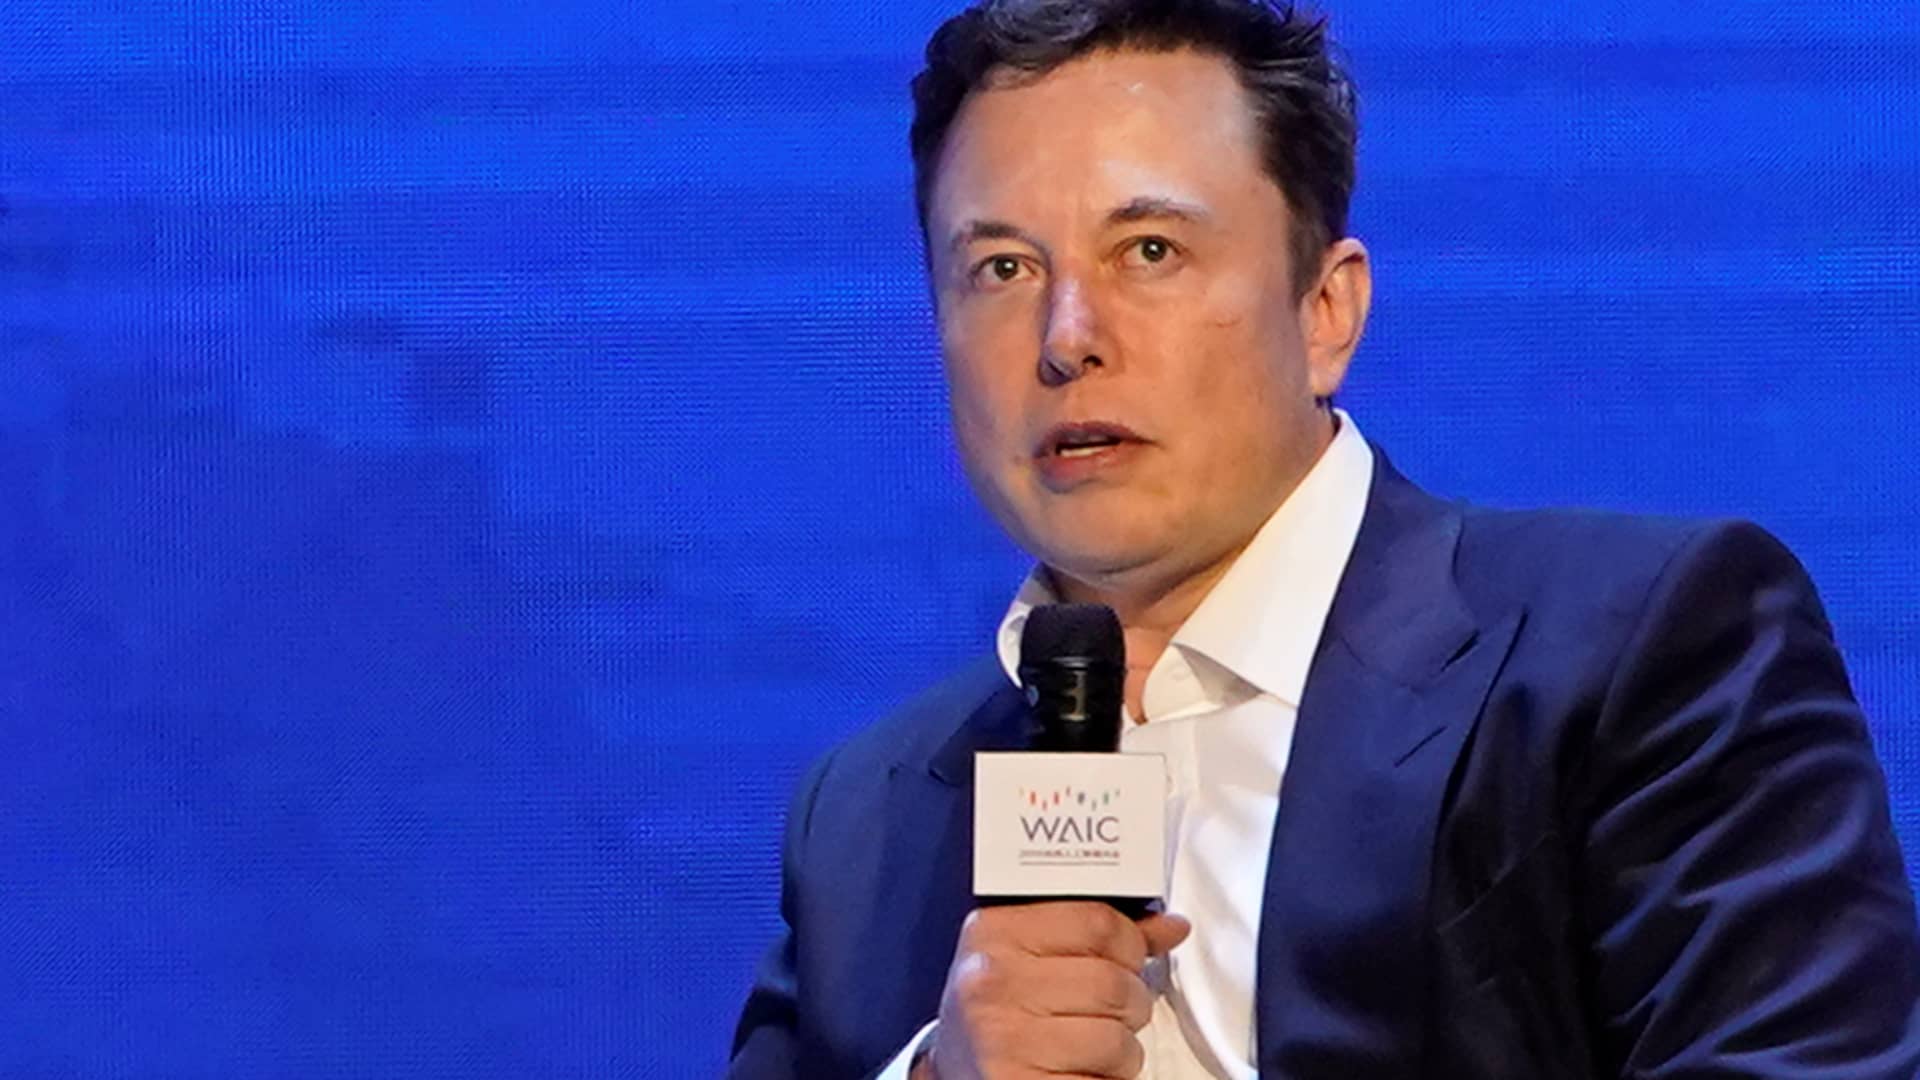 Judge knocks down Elon Musk’s bid to end SEC consent decree